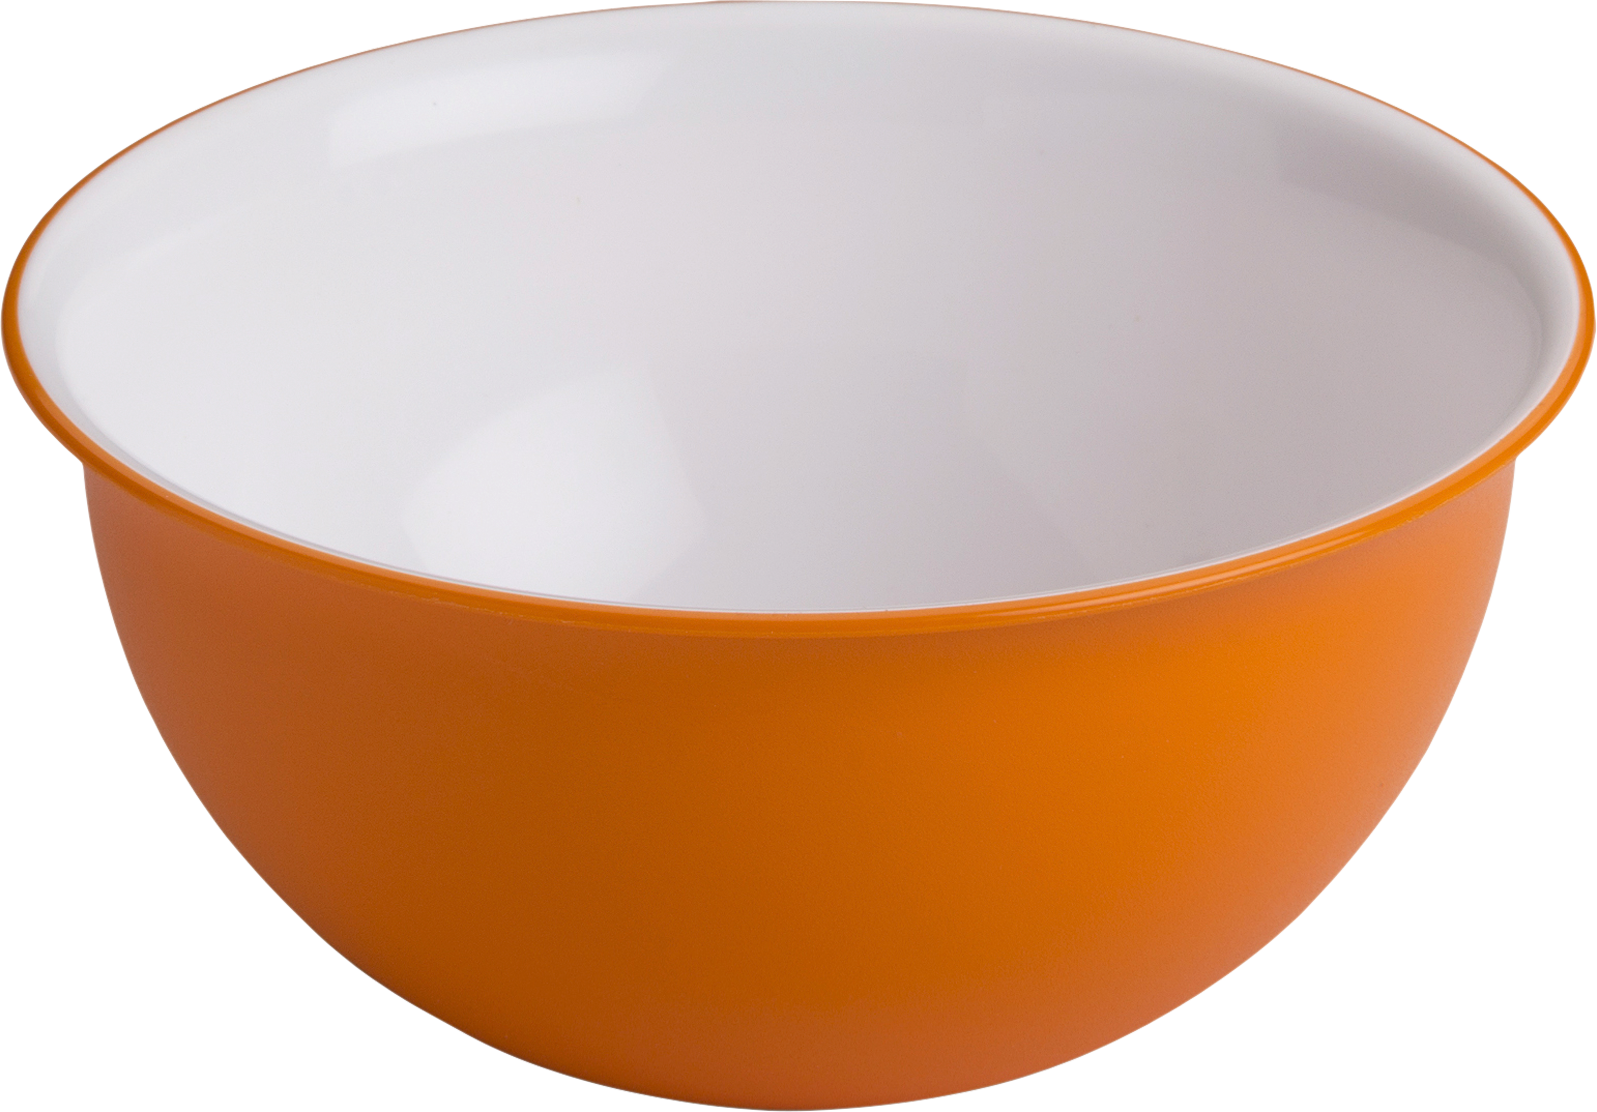 Omada Frühstücksschüssel 13,5 cm 500 ml weiß orange